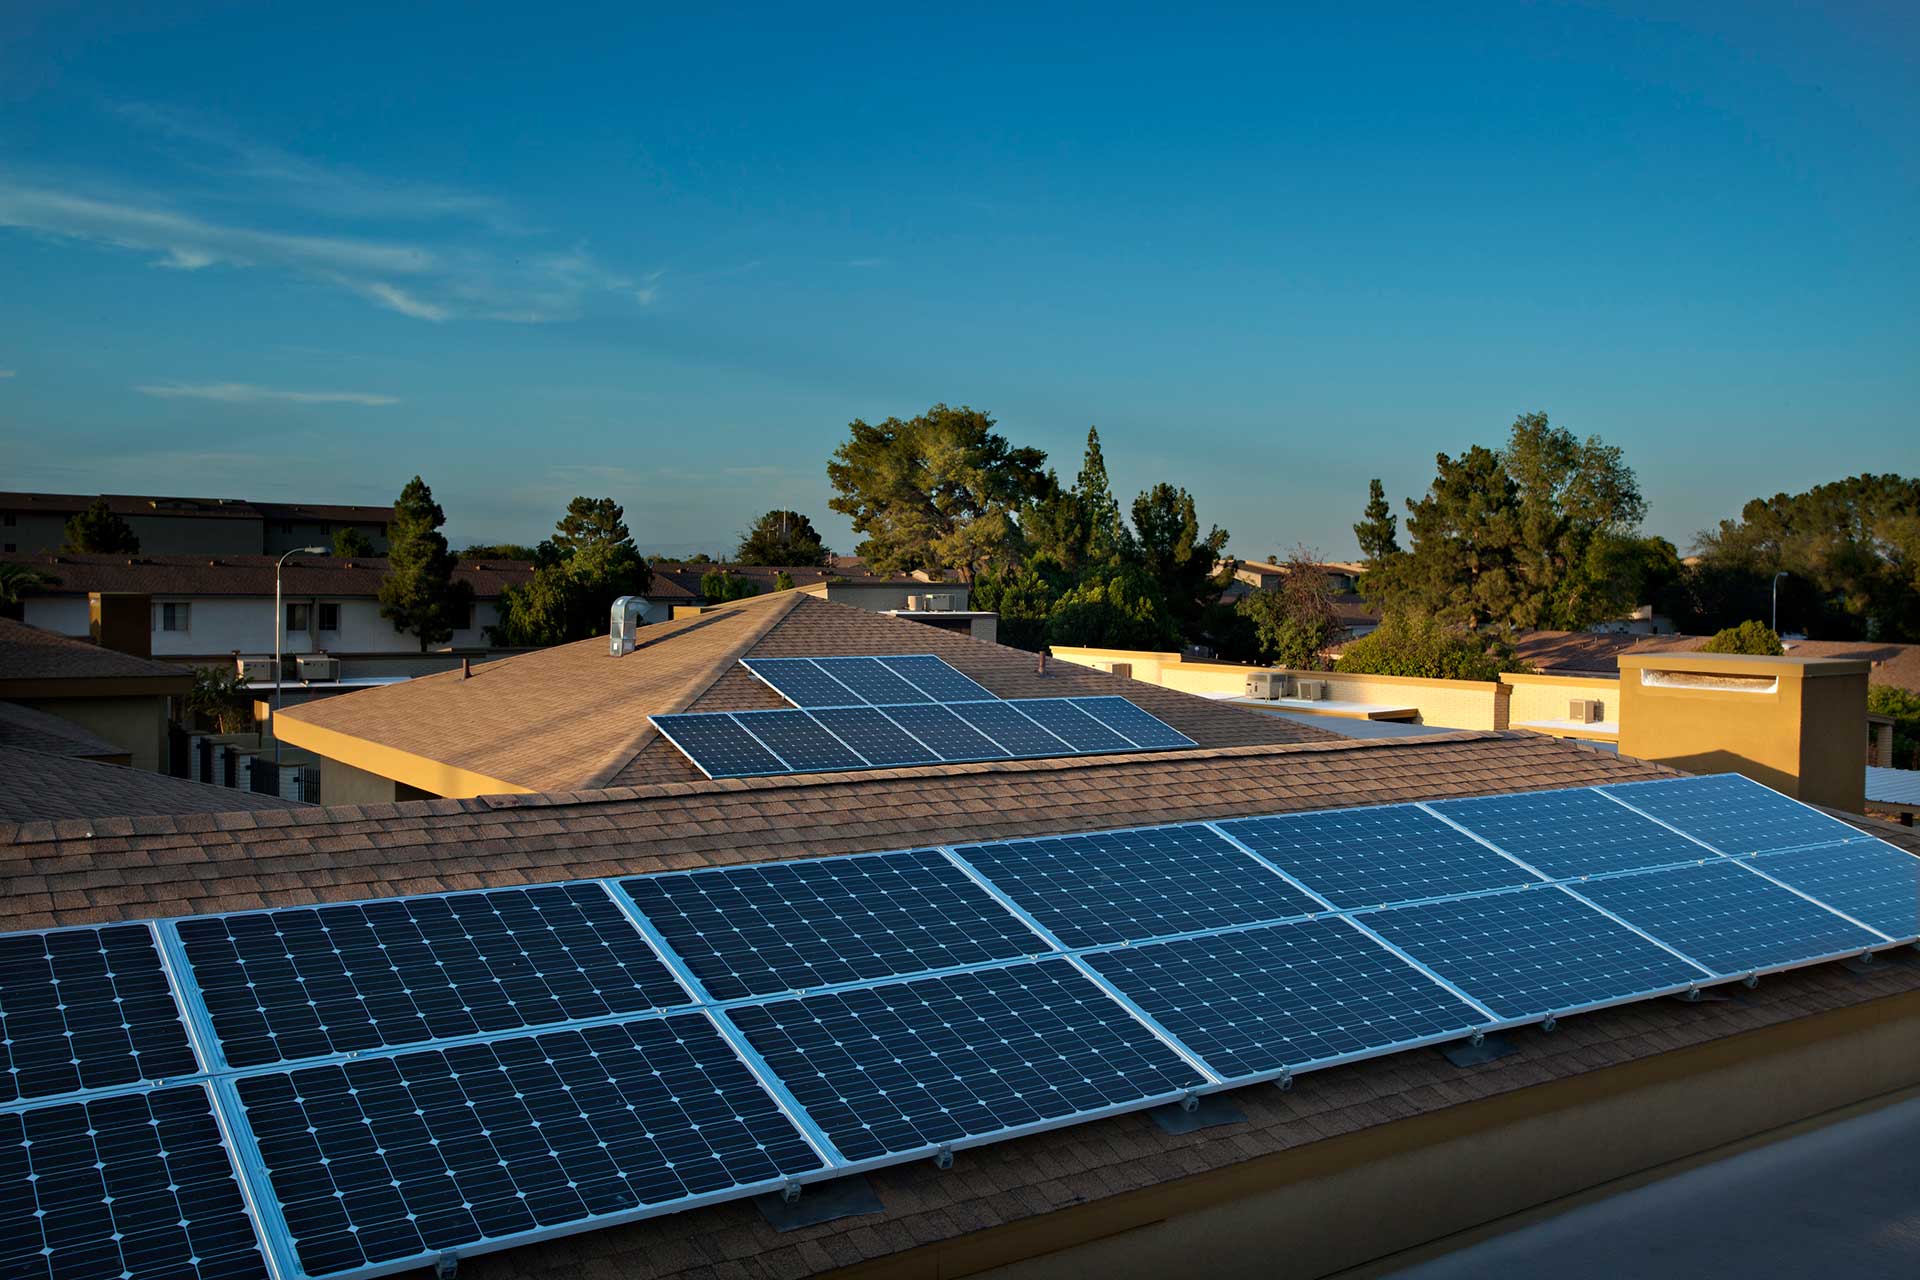 Roof top solar panels at Sarah’s Place at Glencroft